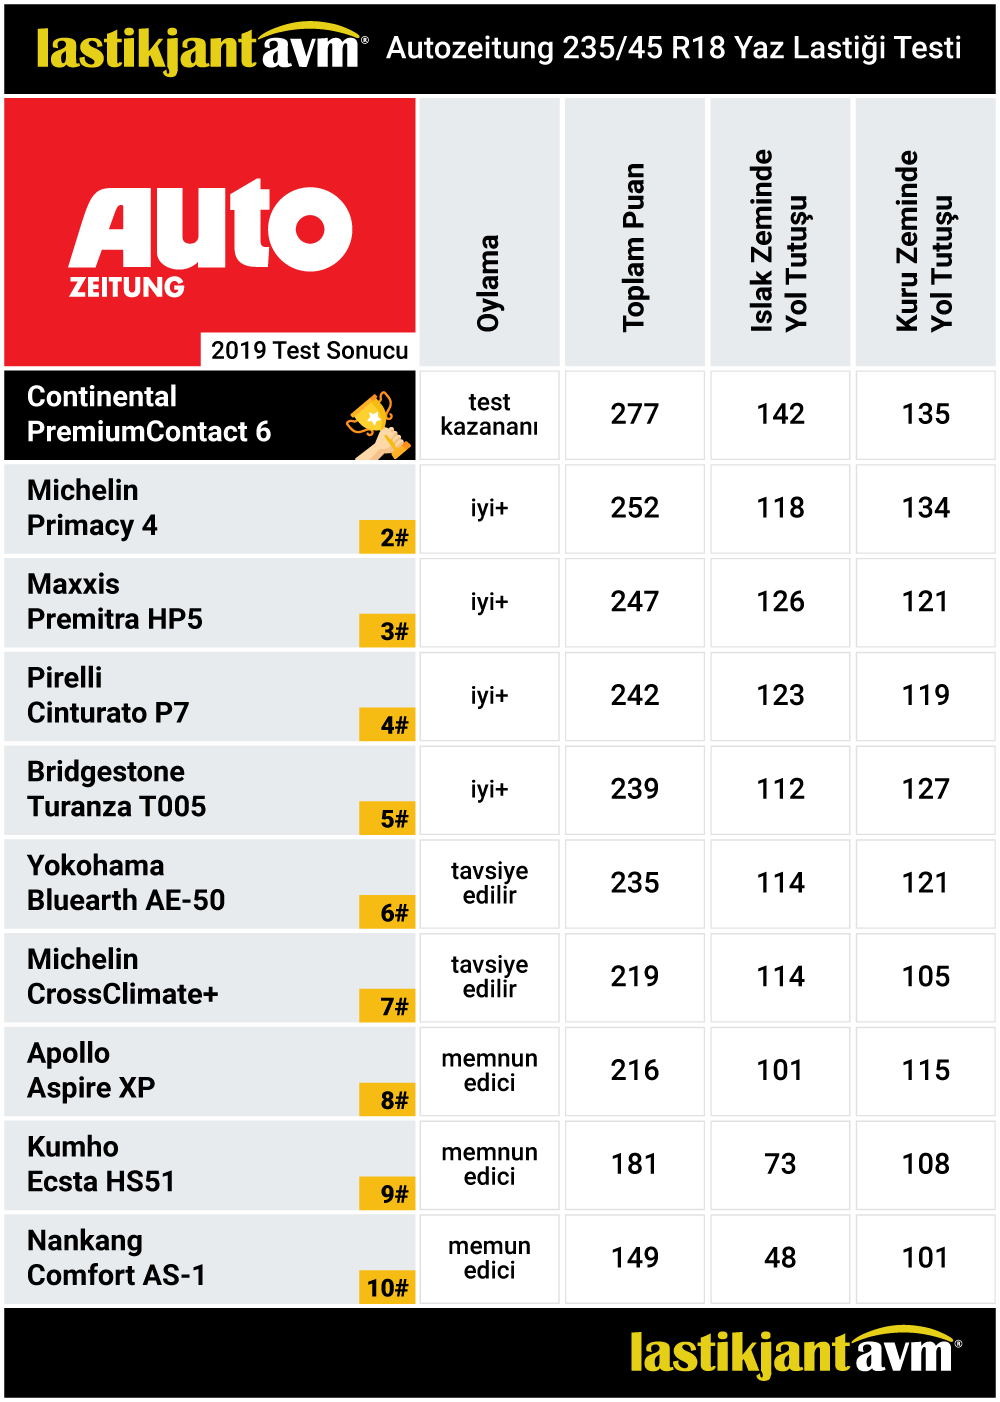 Autozeitung 2019 Continental PremiumContact 6 235 45 r18 Yaz Lastiği Test Sonuçları